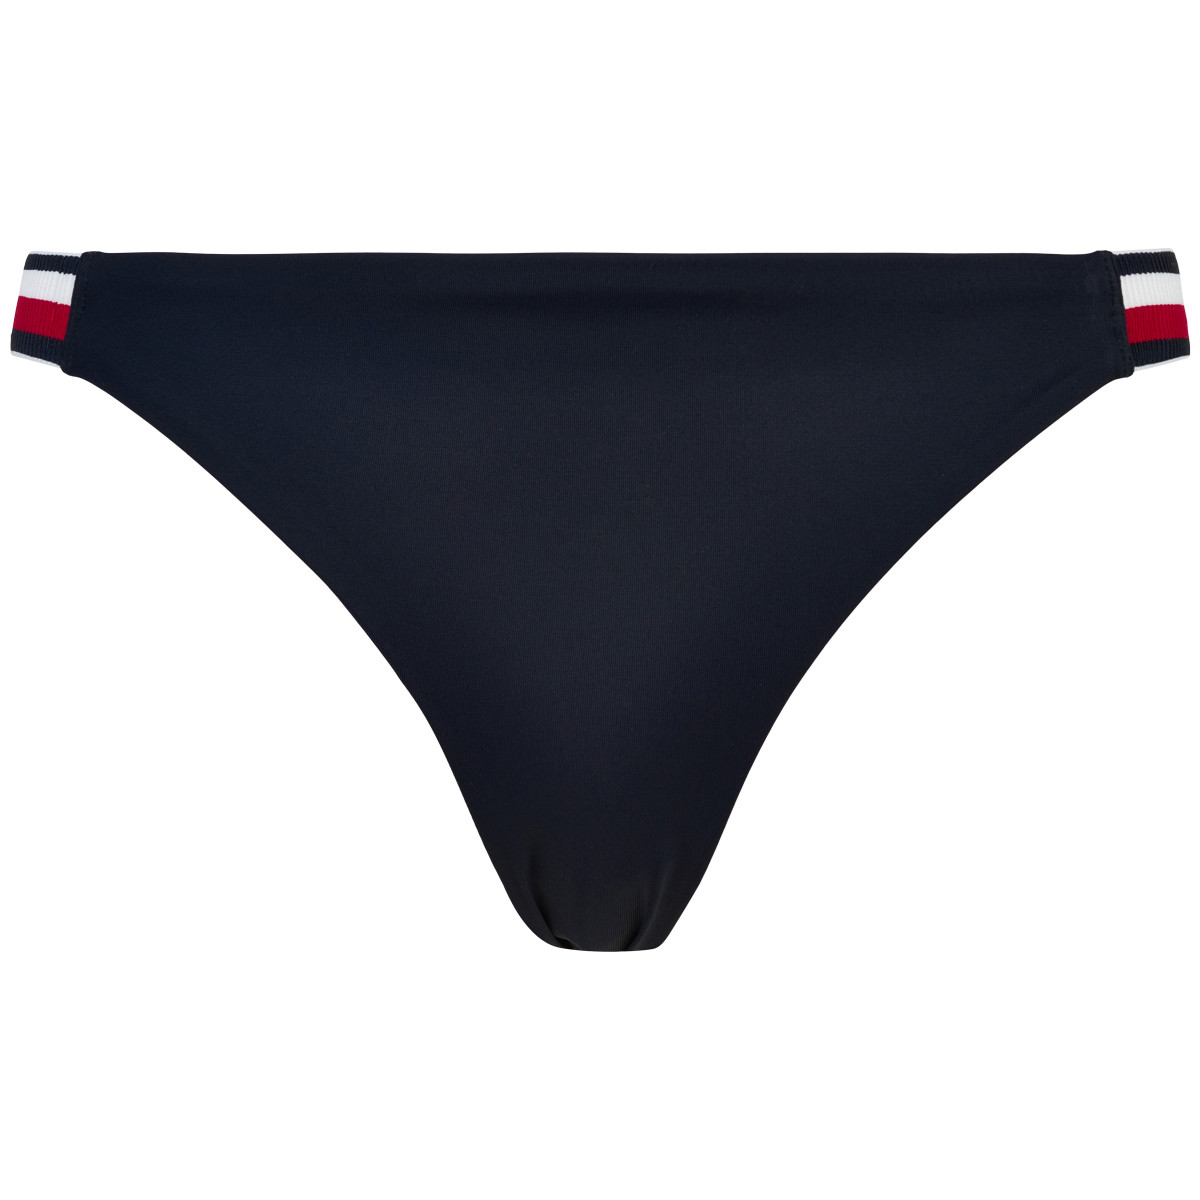 5: Tommy Hilfiger Bikini Mini, Størrelse: S, Farve: Sort, Dame